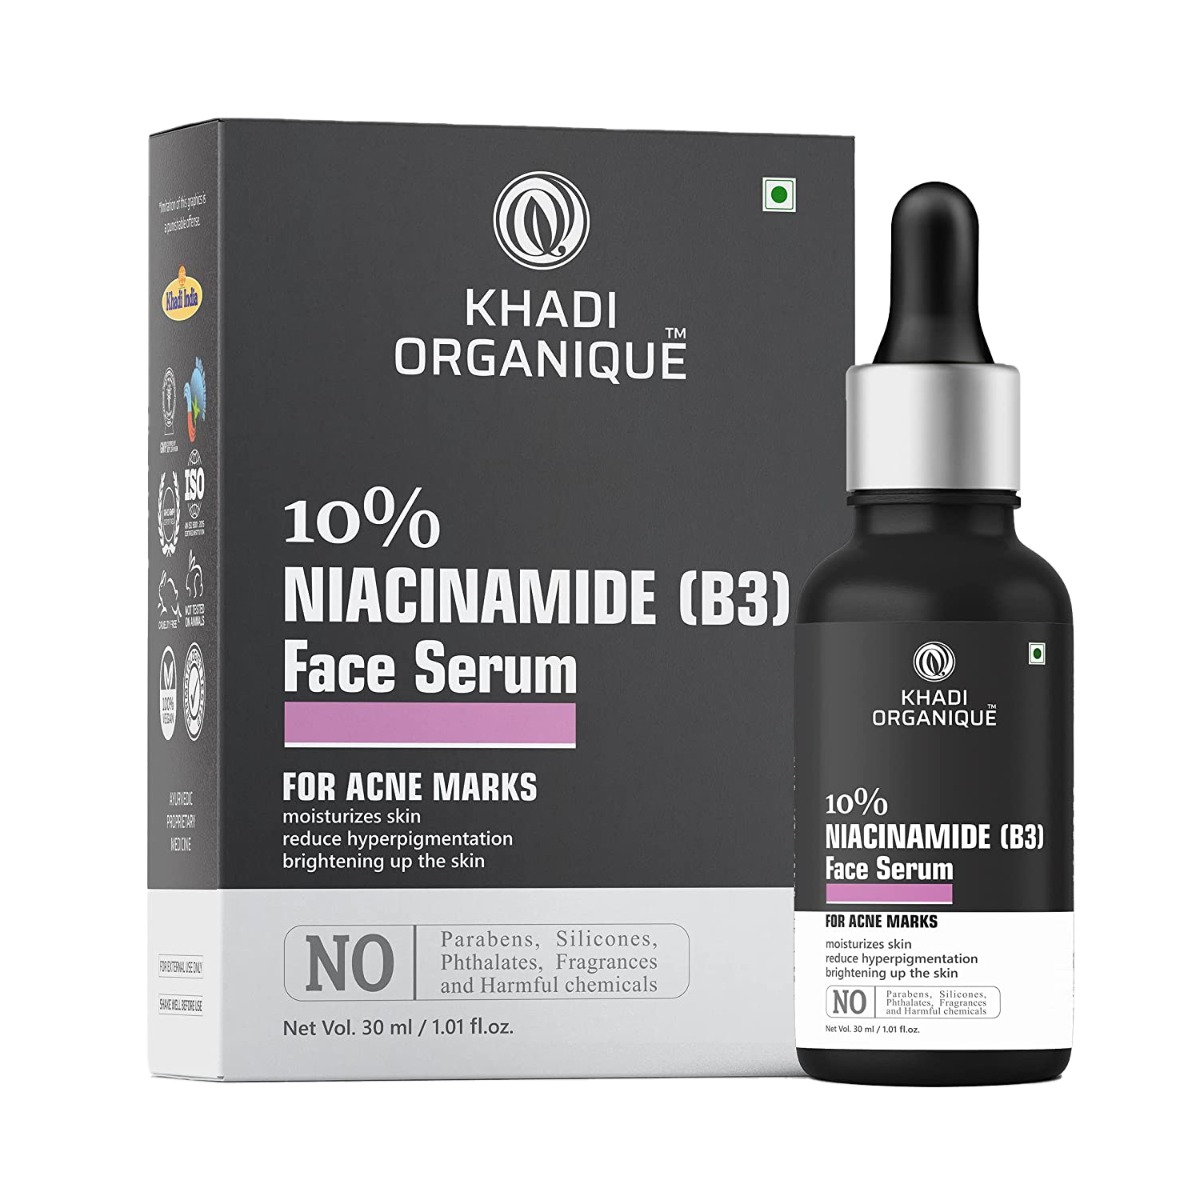 Khadi Organique 10% Niacinamide (B3) Face Serum, 30ml